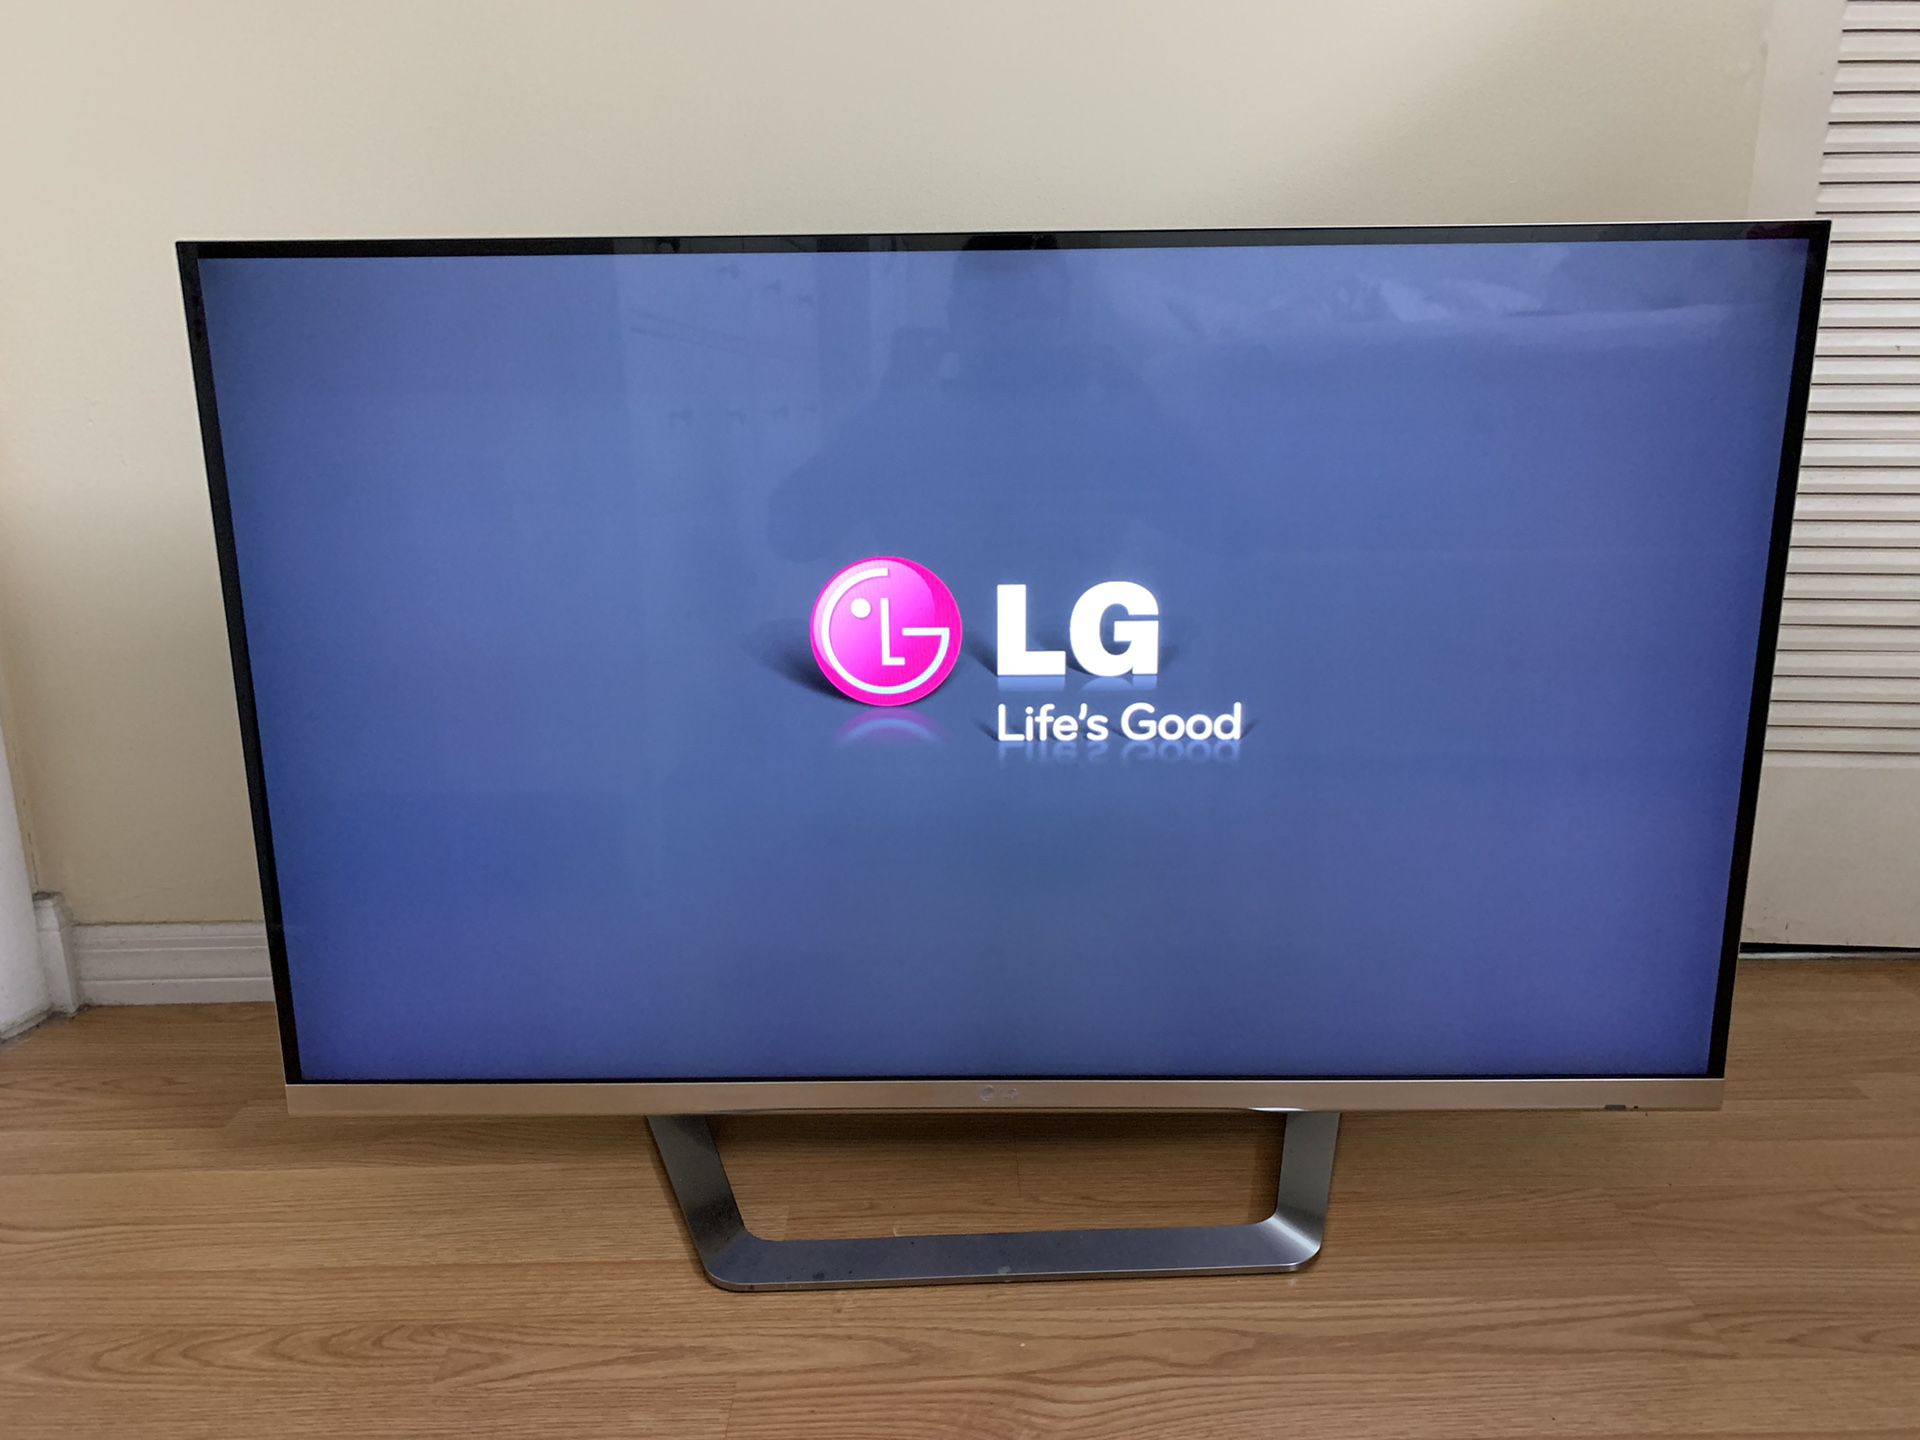 47” LG LED Television (1080p)